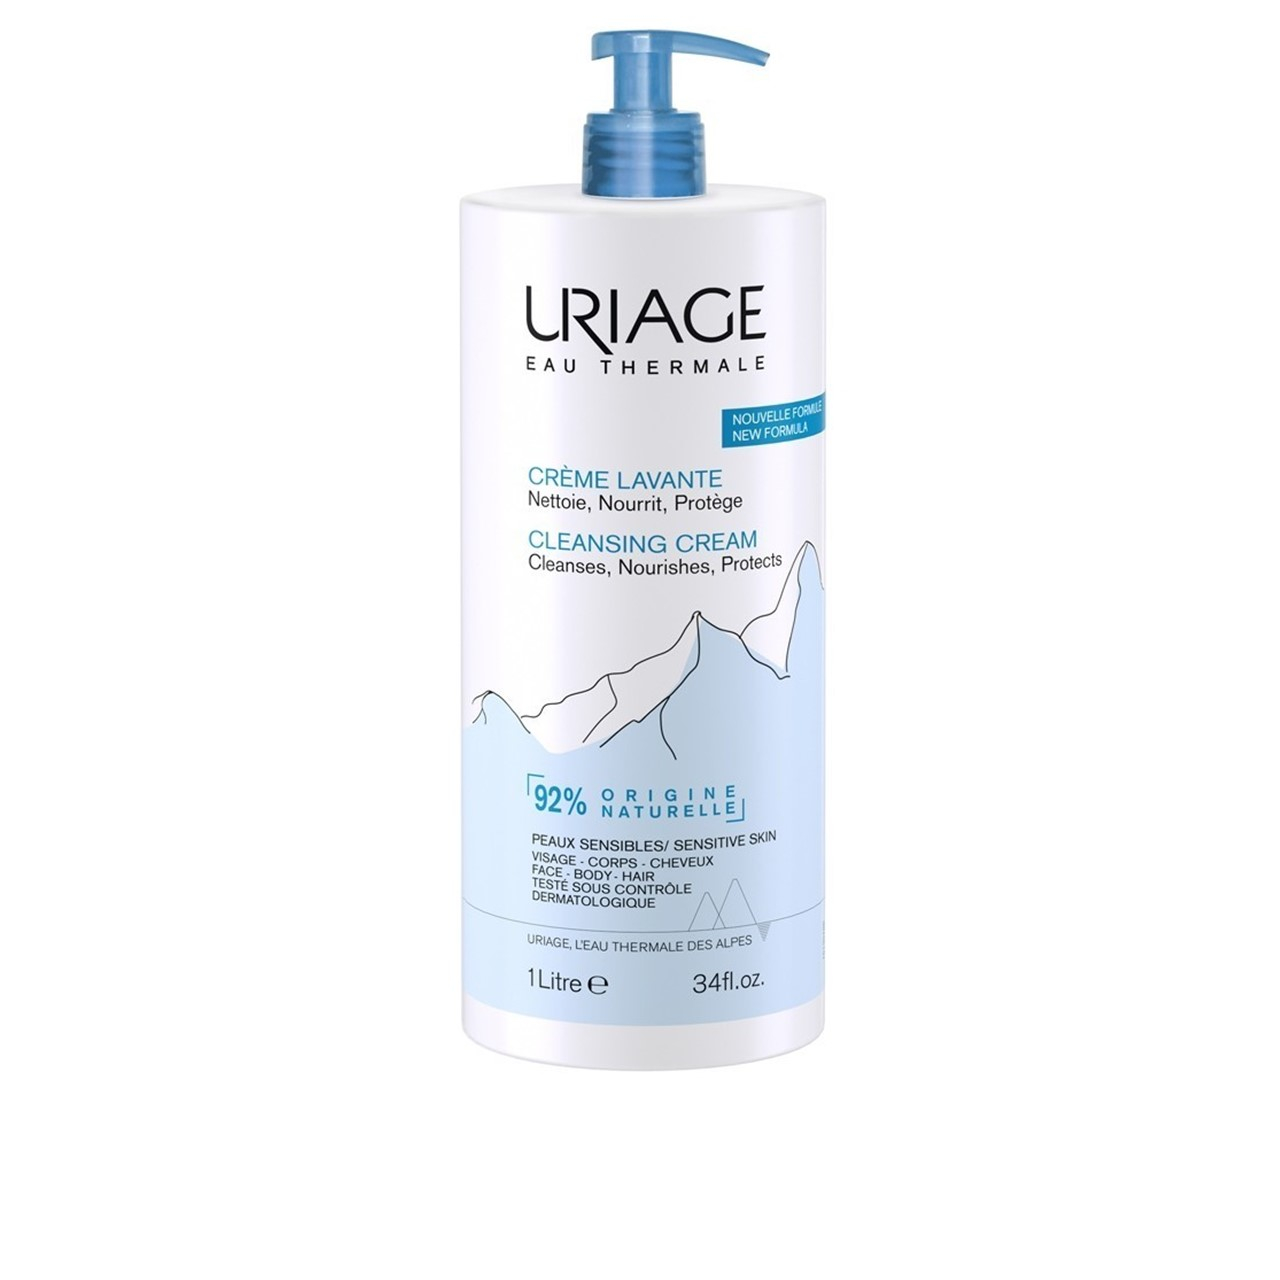 Uriage Cleansing Cream 1L (33.81fl oz)